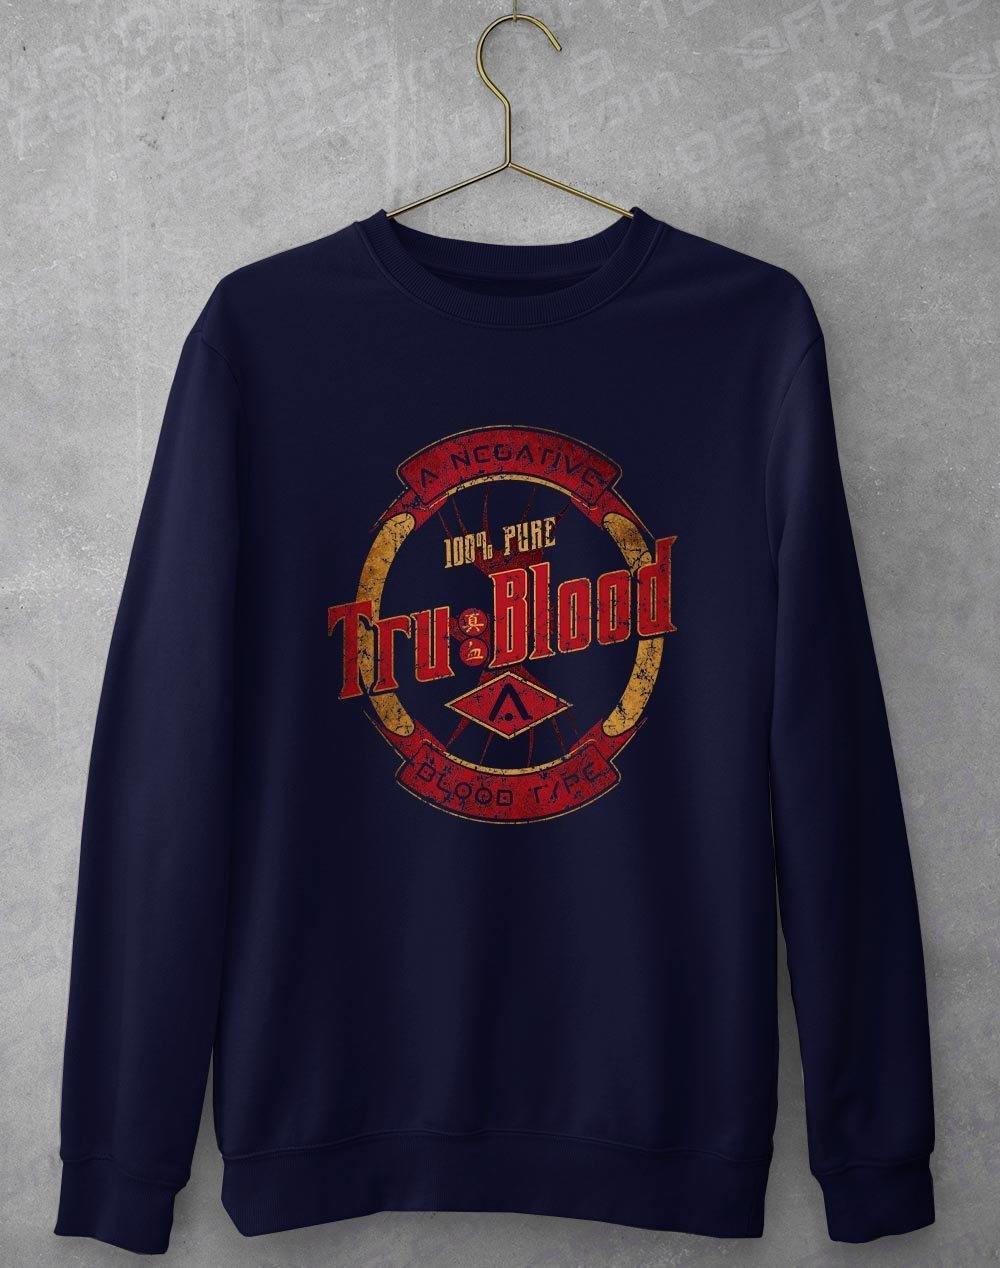 Tru Blood Sweatshirt S / Oxford Navy  - Off World Tees